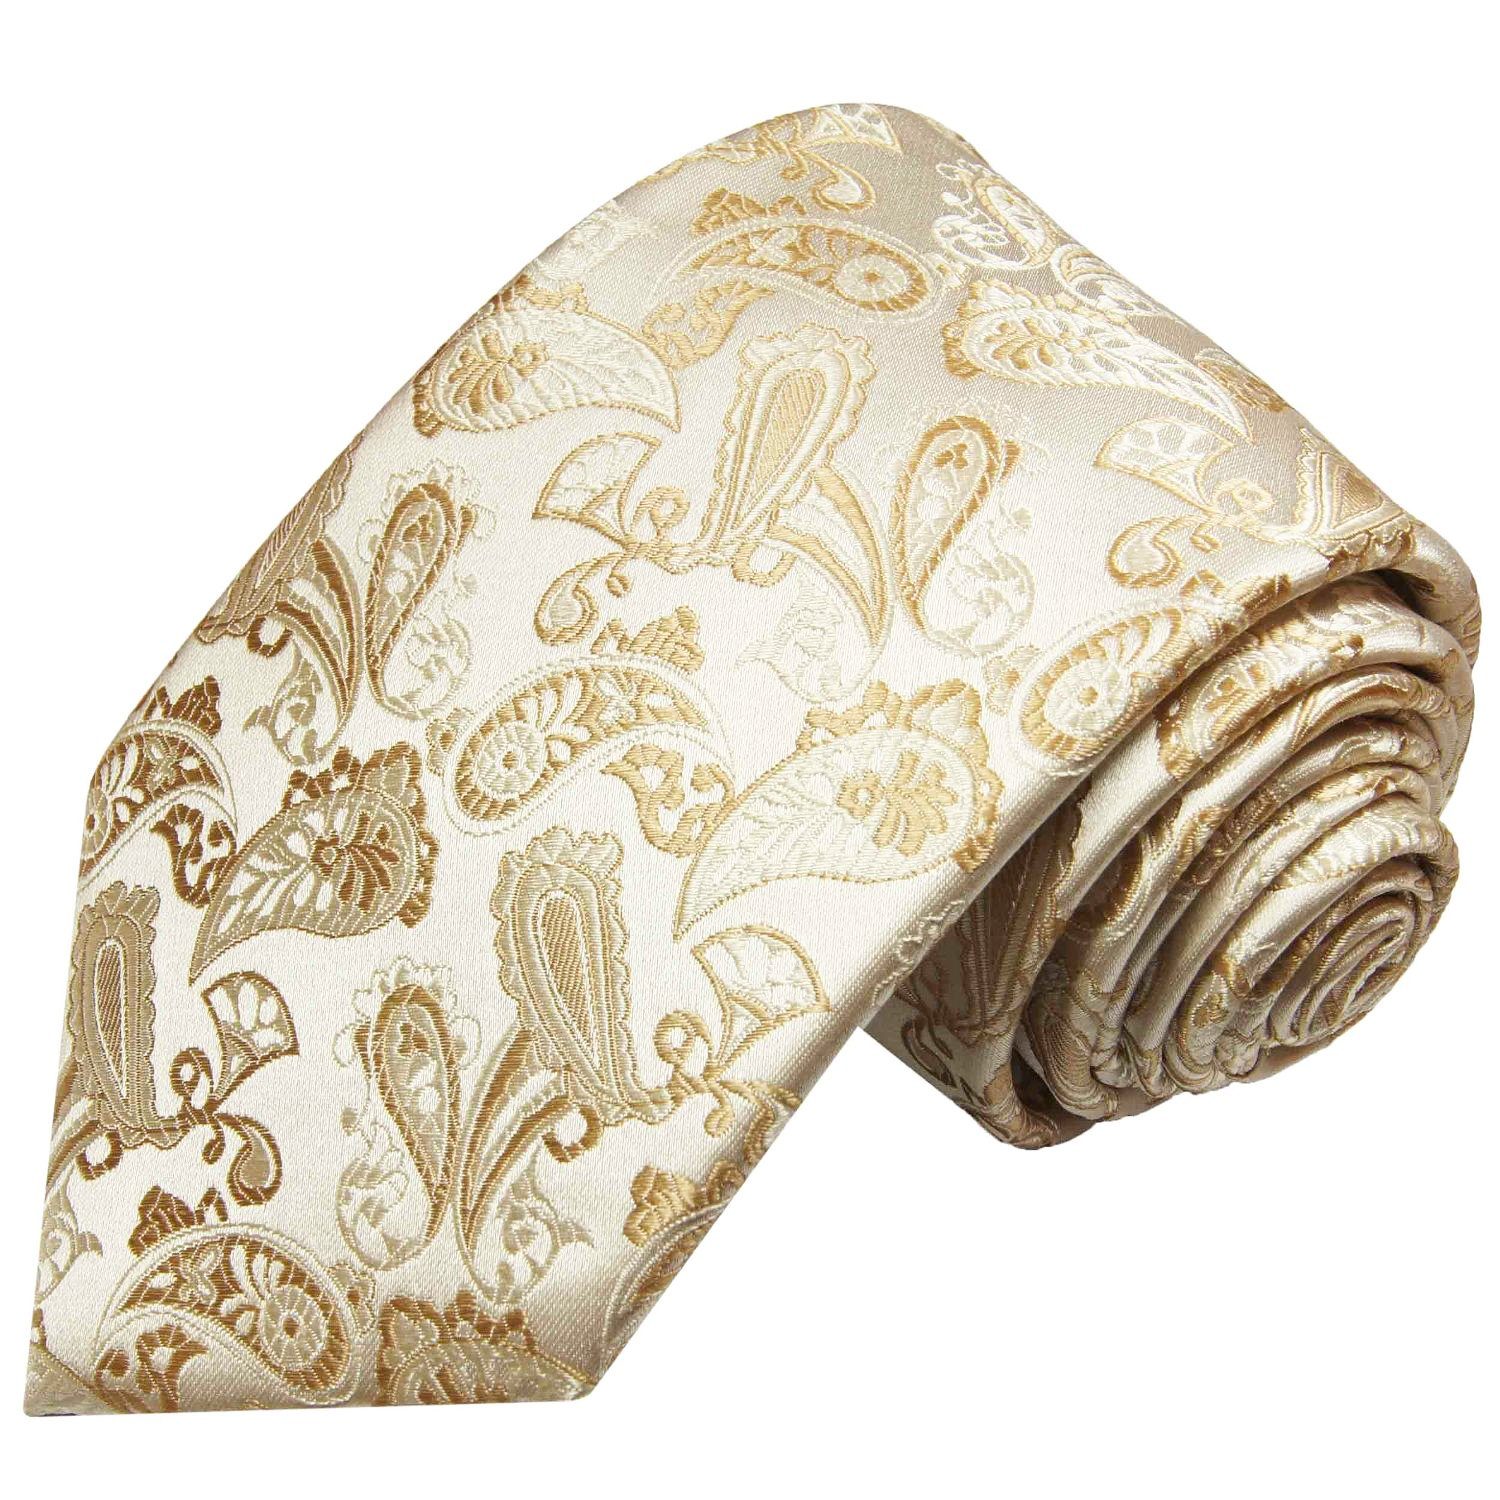 762 Paul Breit (8cm), Schlips Herren paisley Malone 100% Seide Krawatte braun ivory Seidenkrawatte Elegante brokat